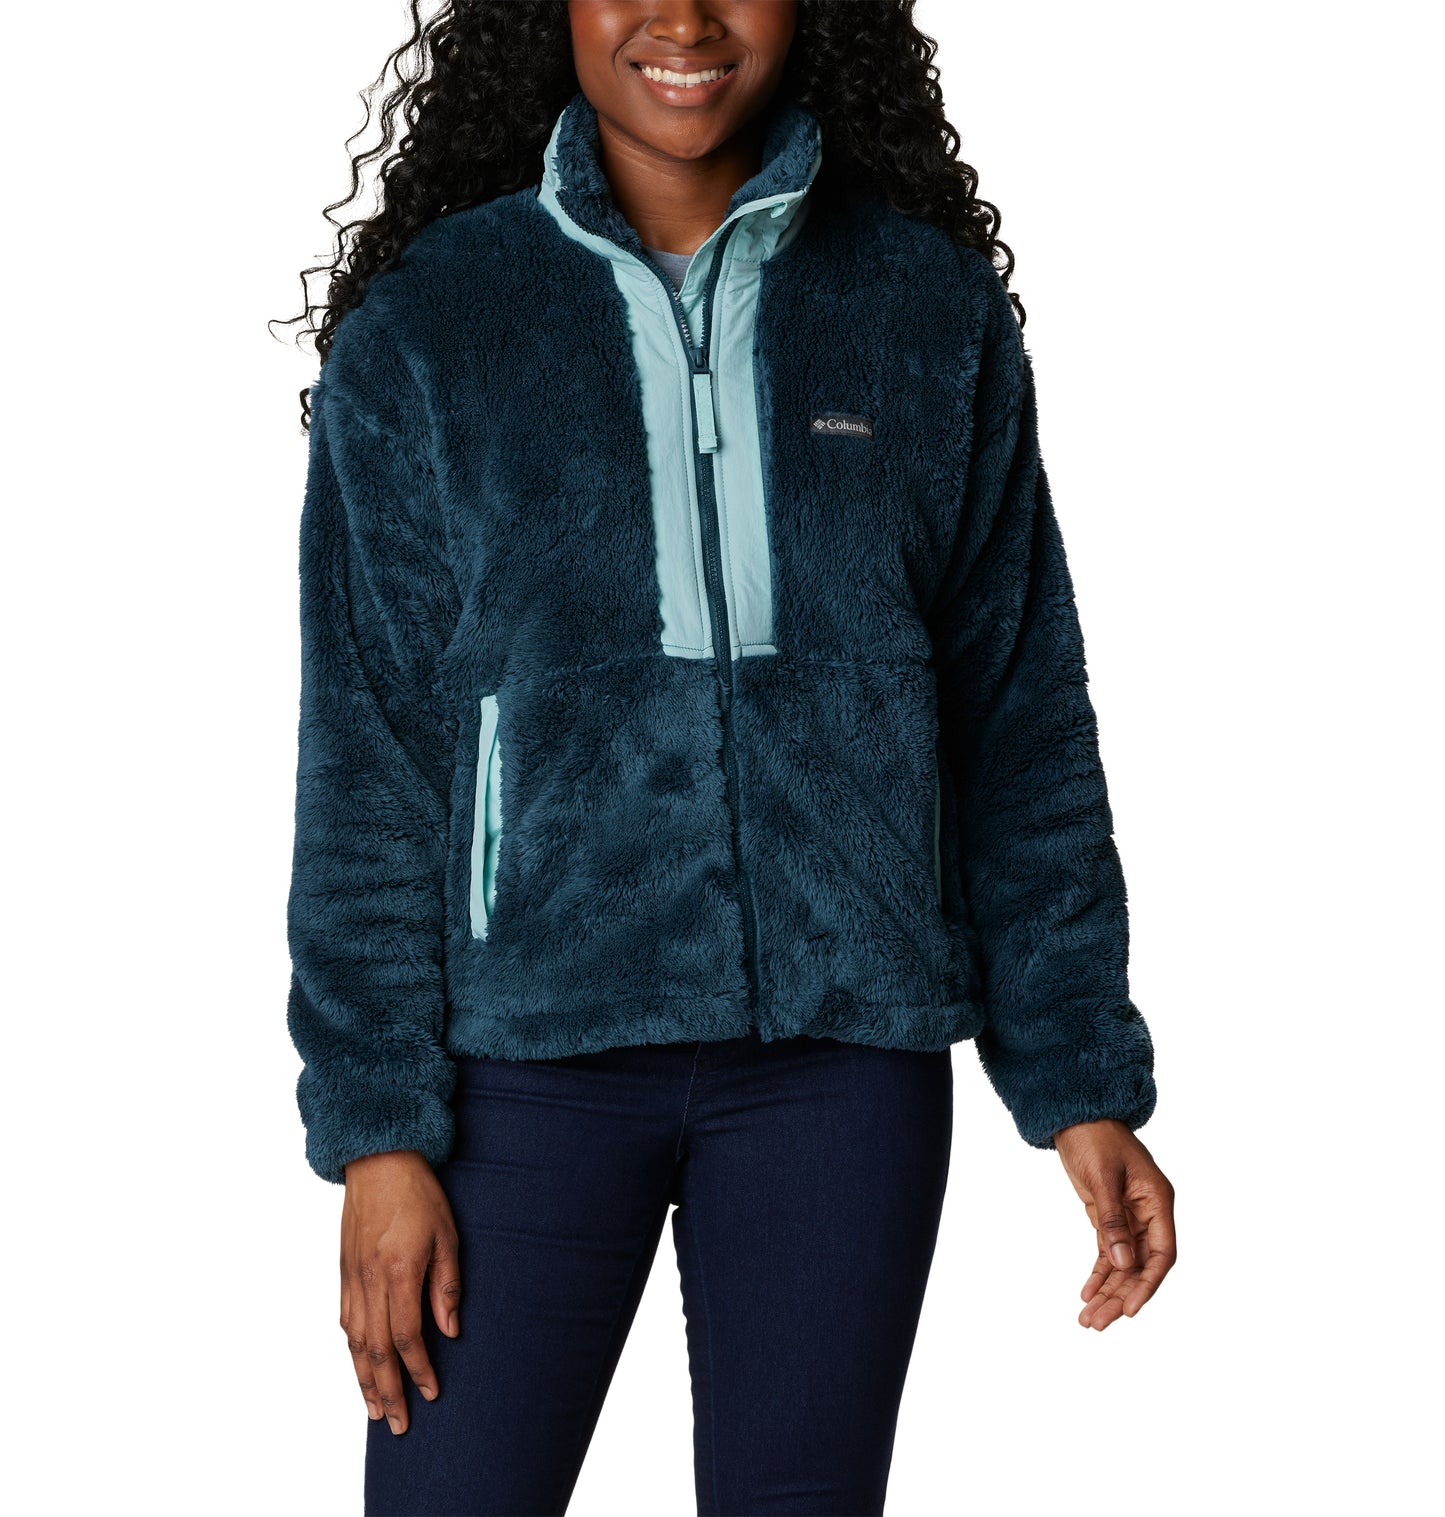 Women's Boundless Discovery™ Sherpa Fleece Jacket